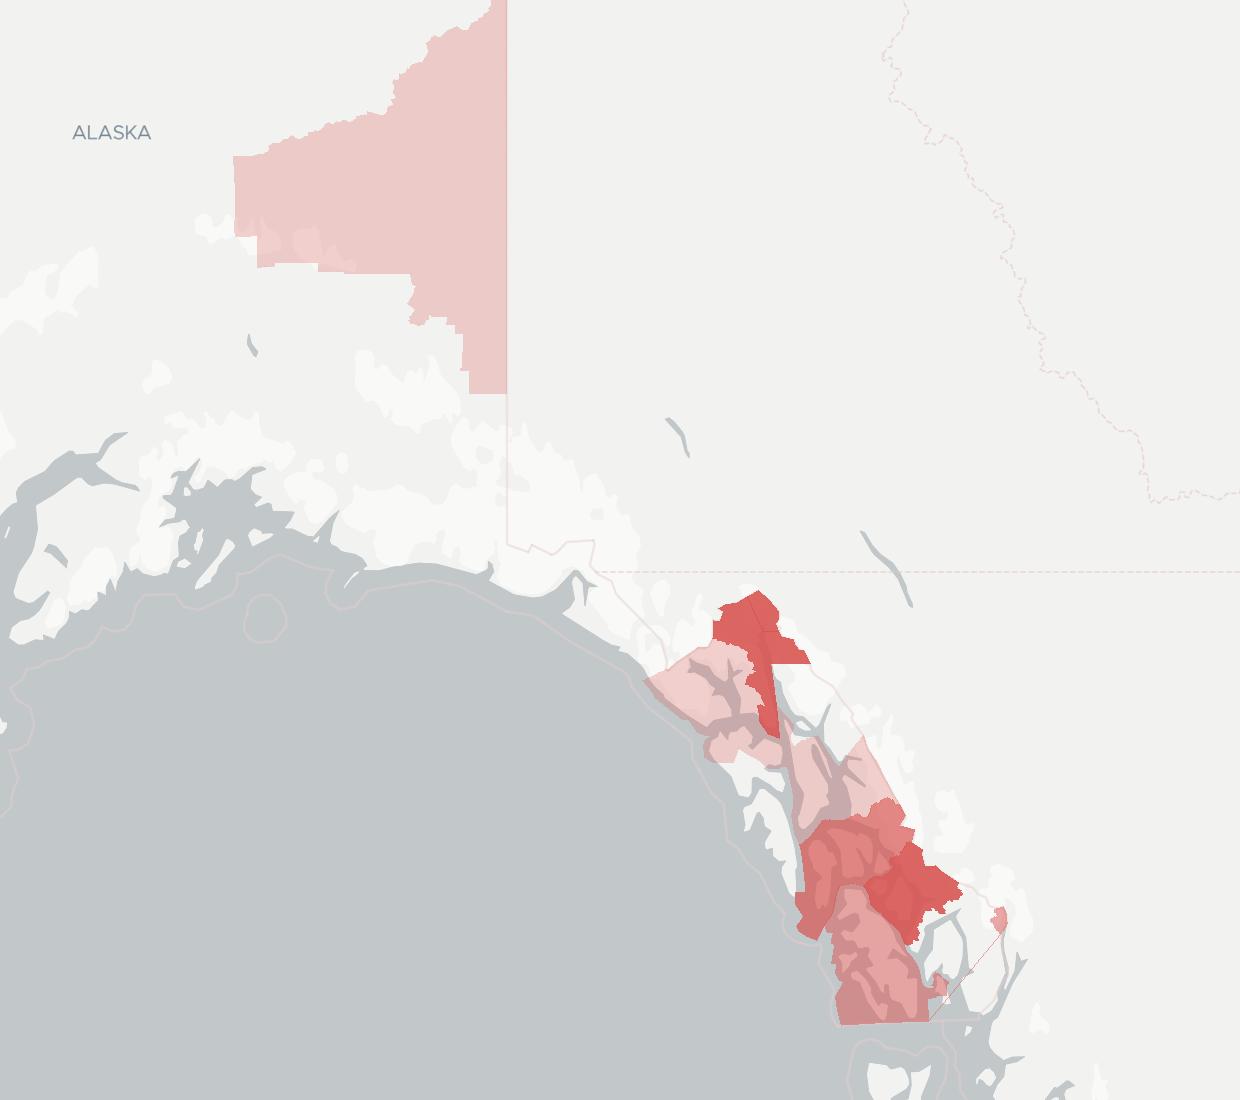 Alaska Power & Telephone Coverage Map